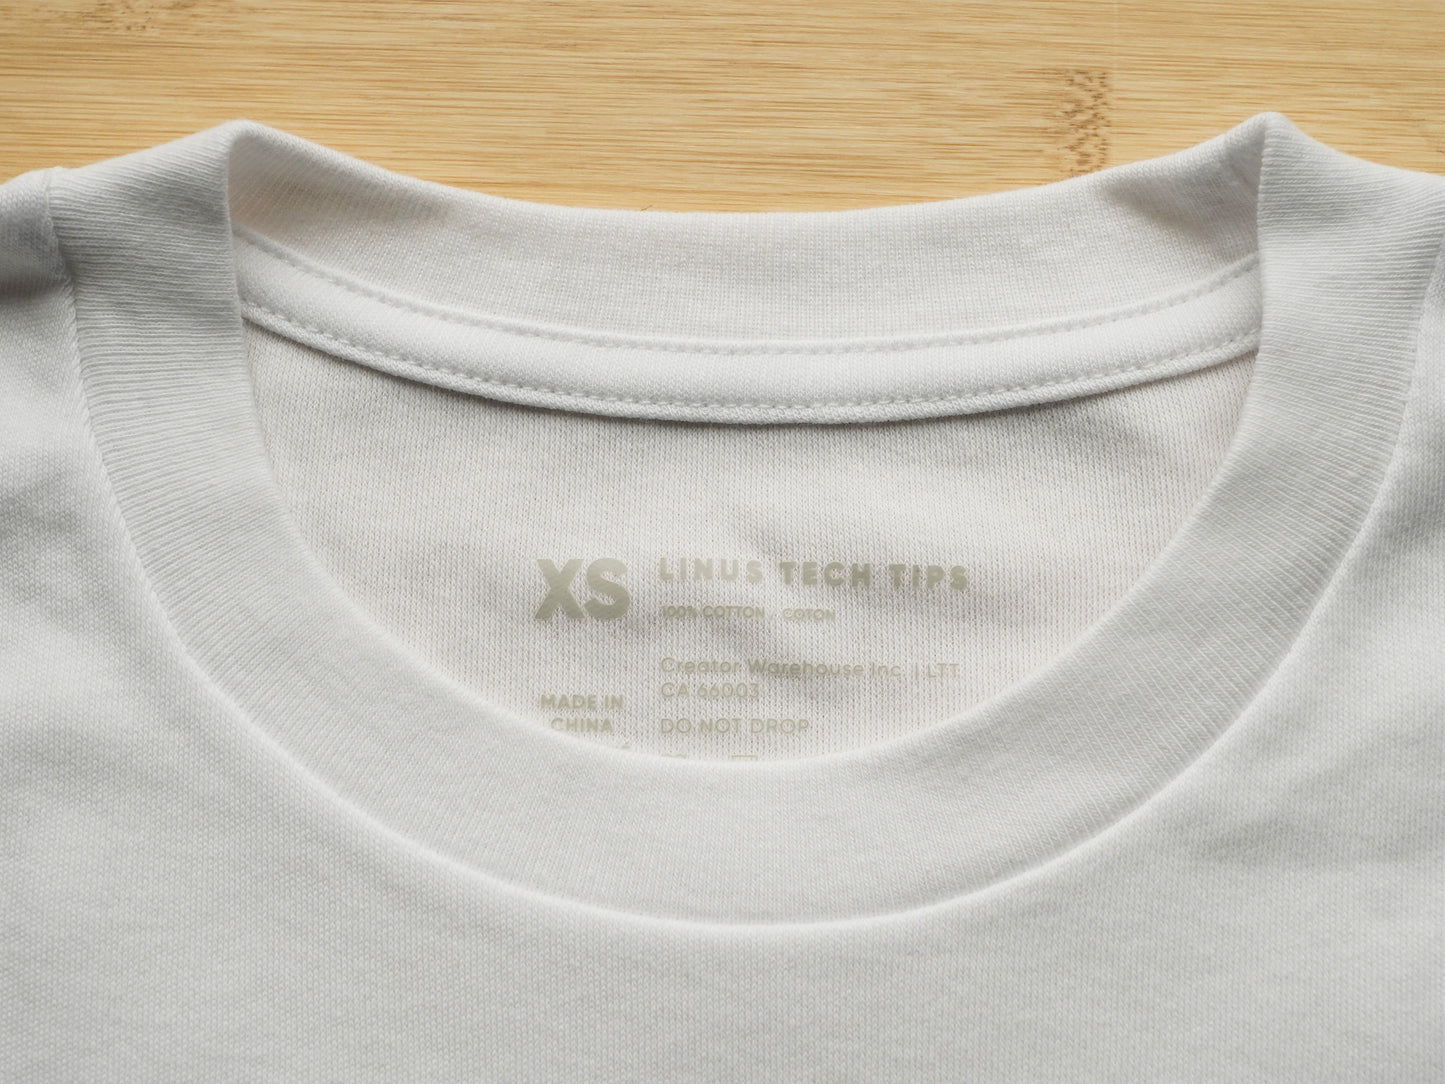 100% Cotton T-shirt